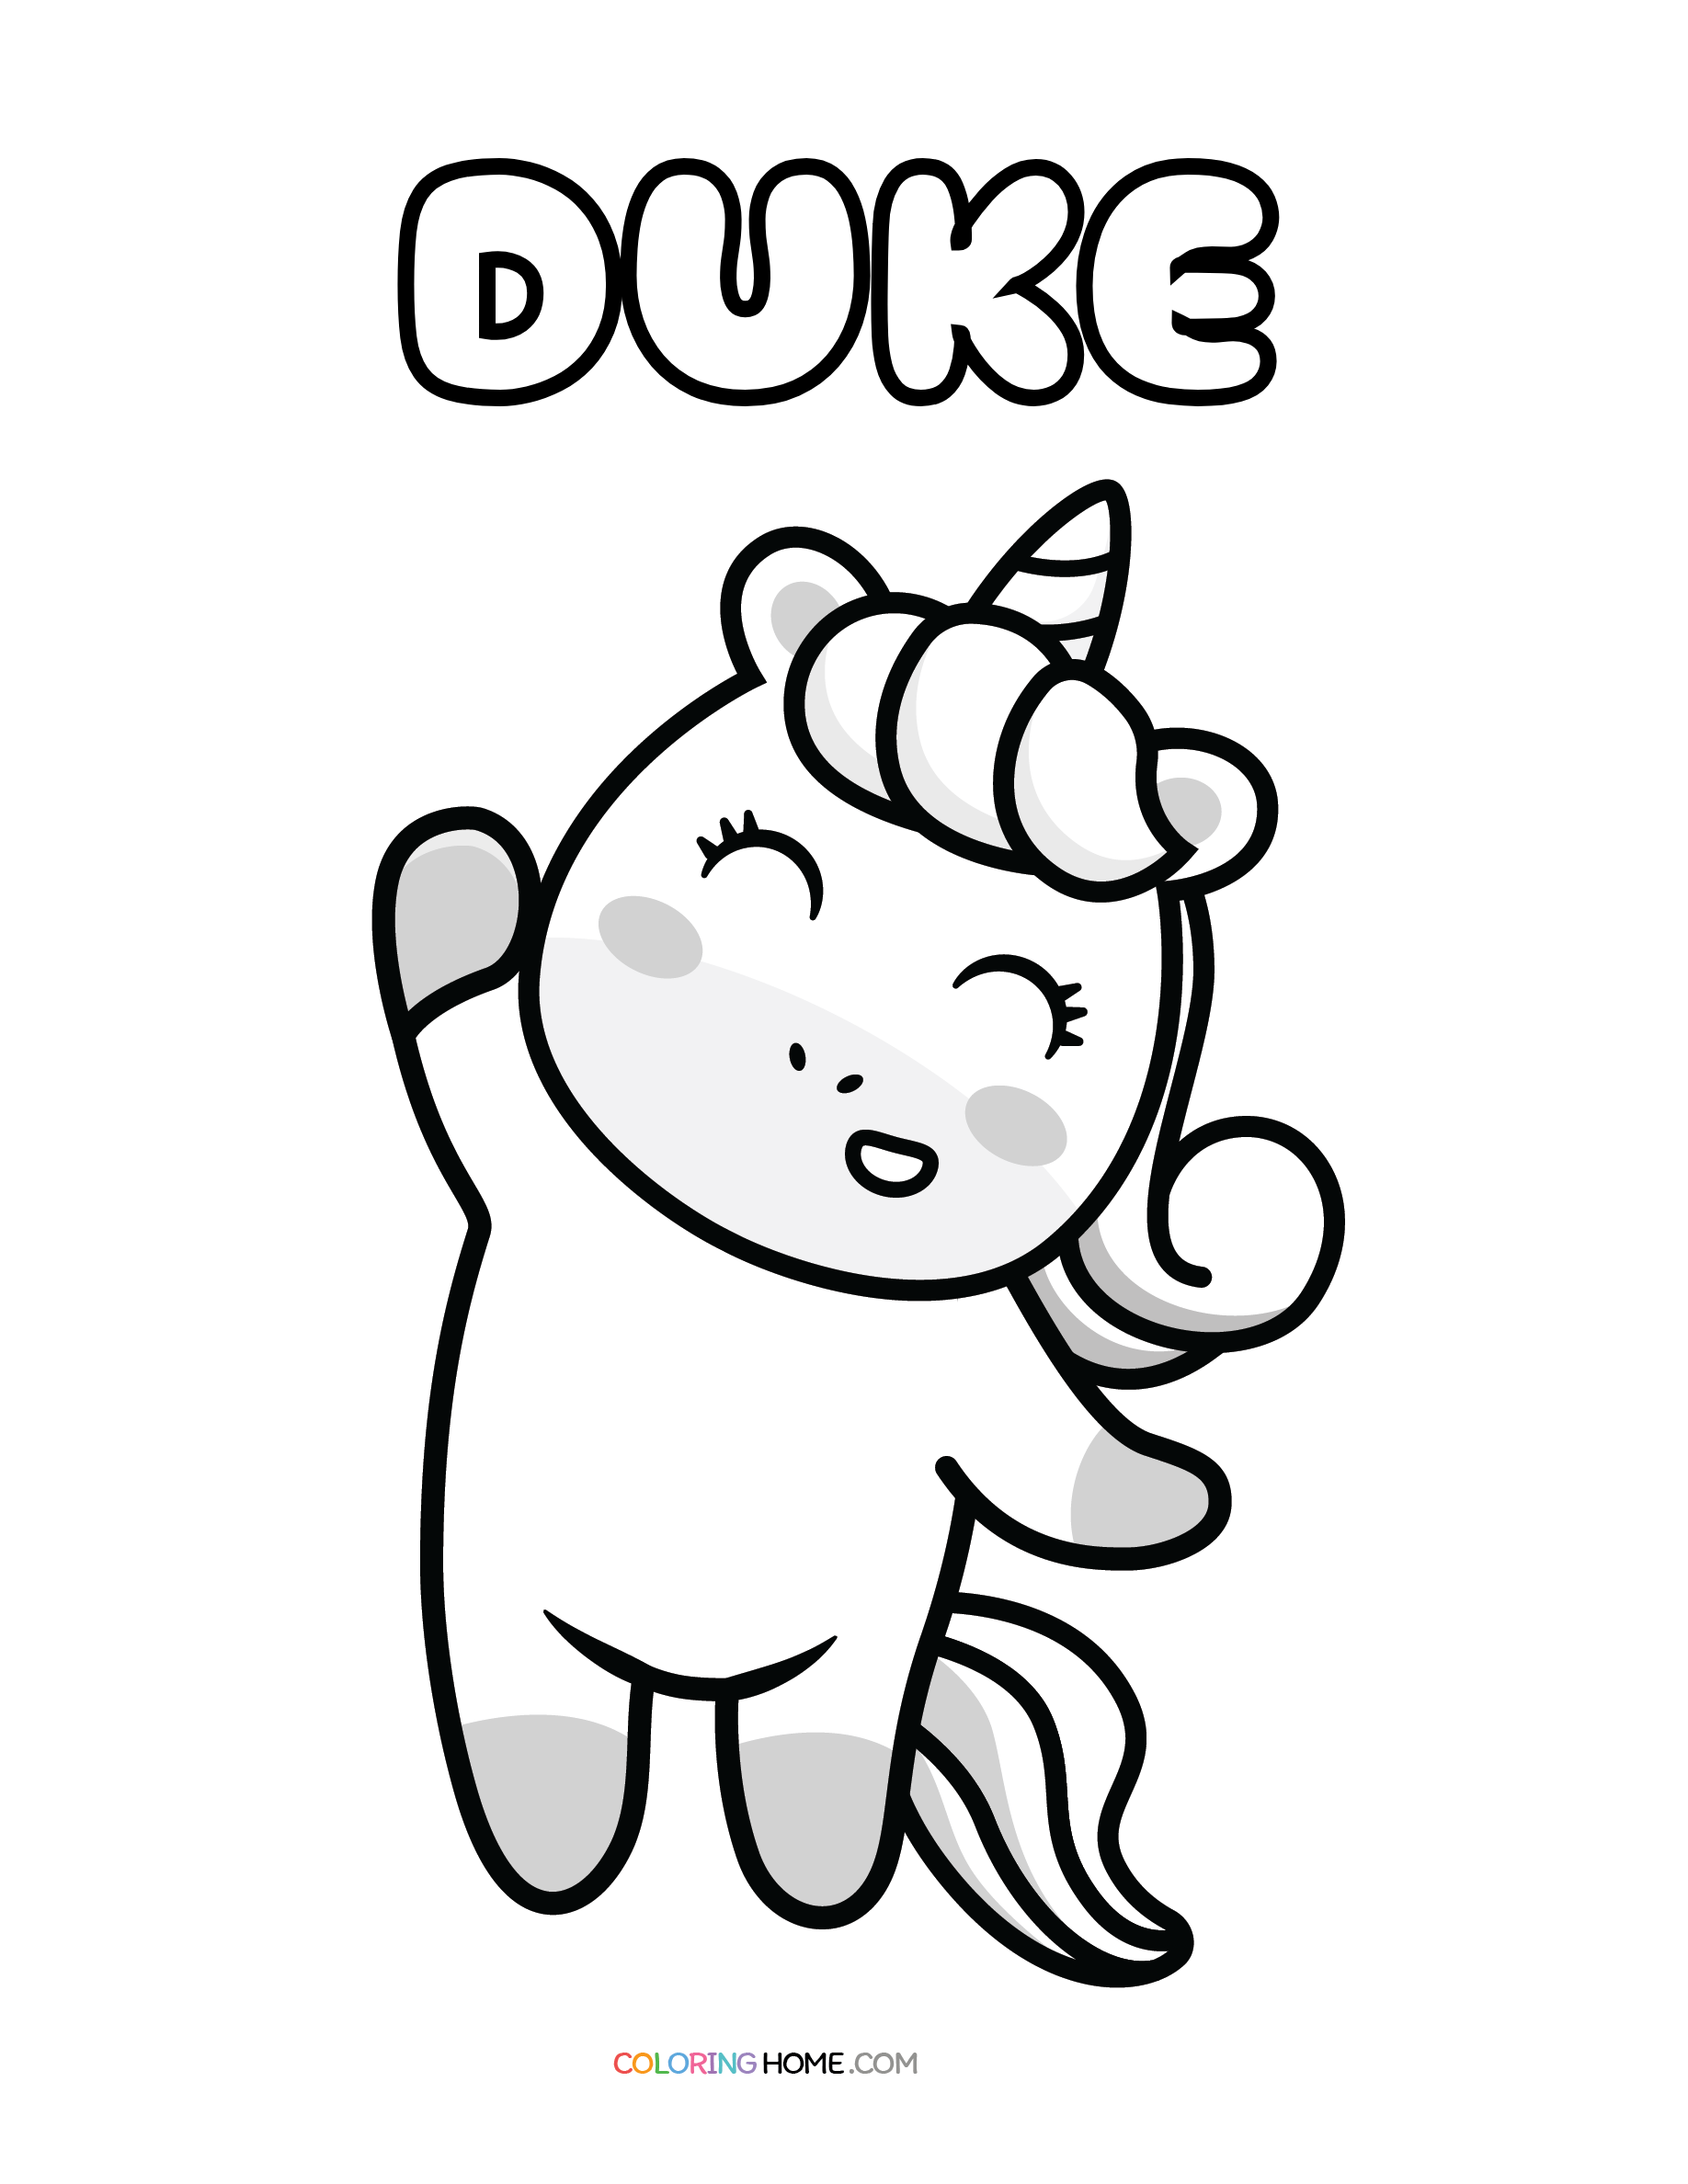 Duke unicorn coloring page